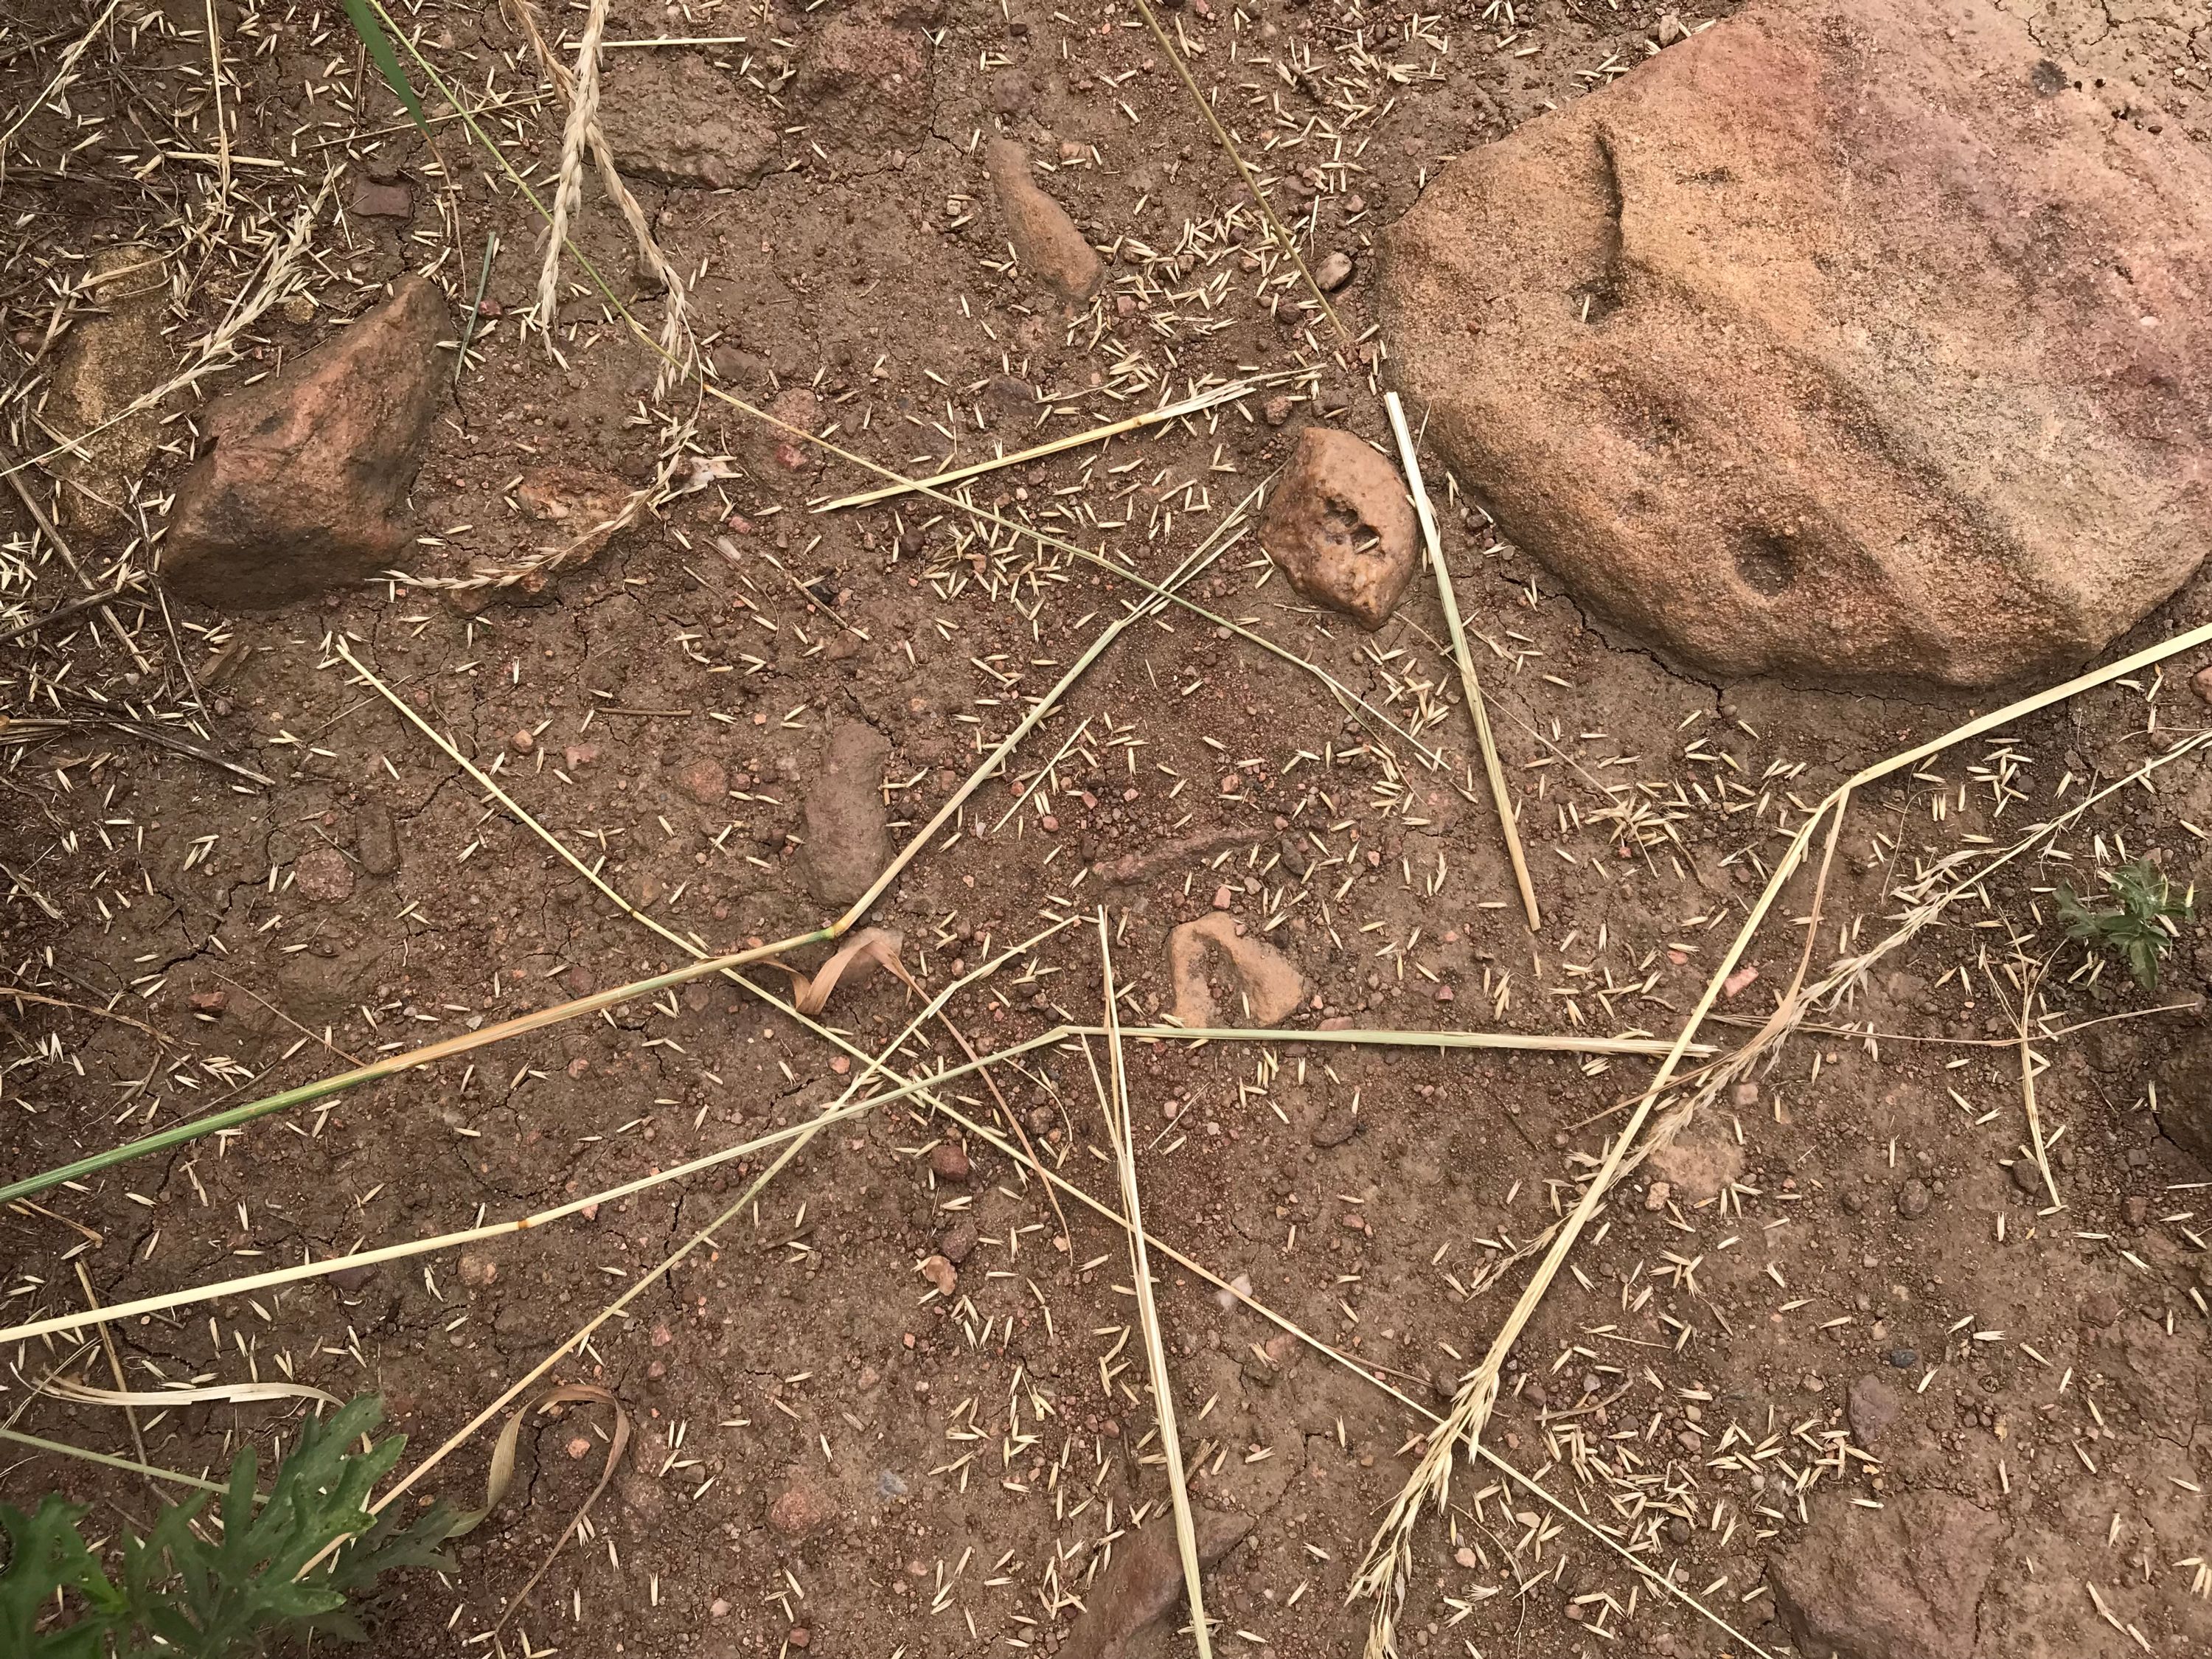 Tall oatgrass seeds on a hiking trail